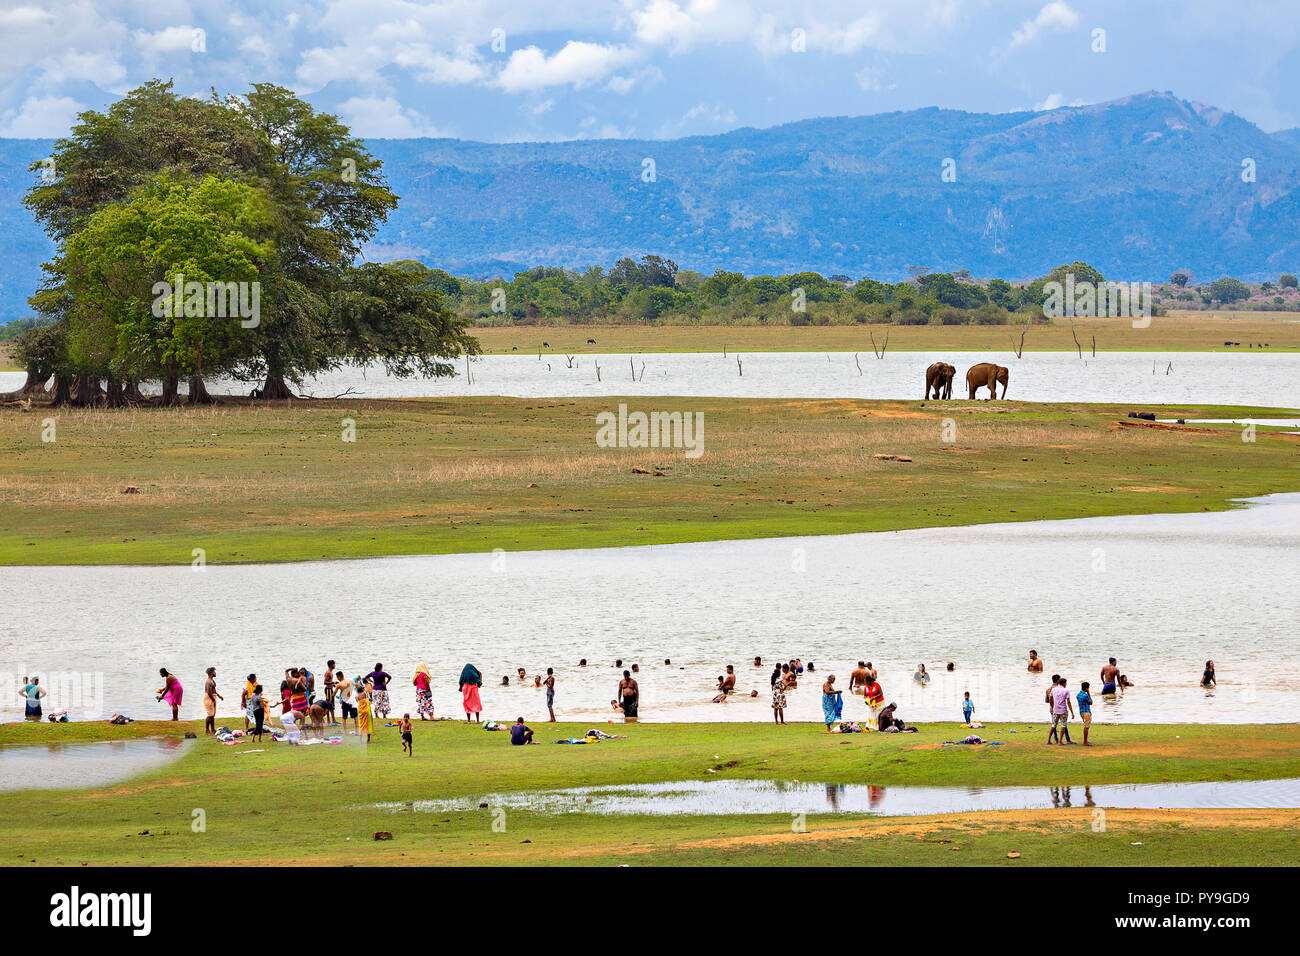 People washing in the lake and elephants in the background, in Uda Walawe, Sri Lanka. Stock Photo